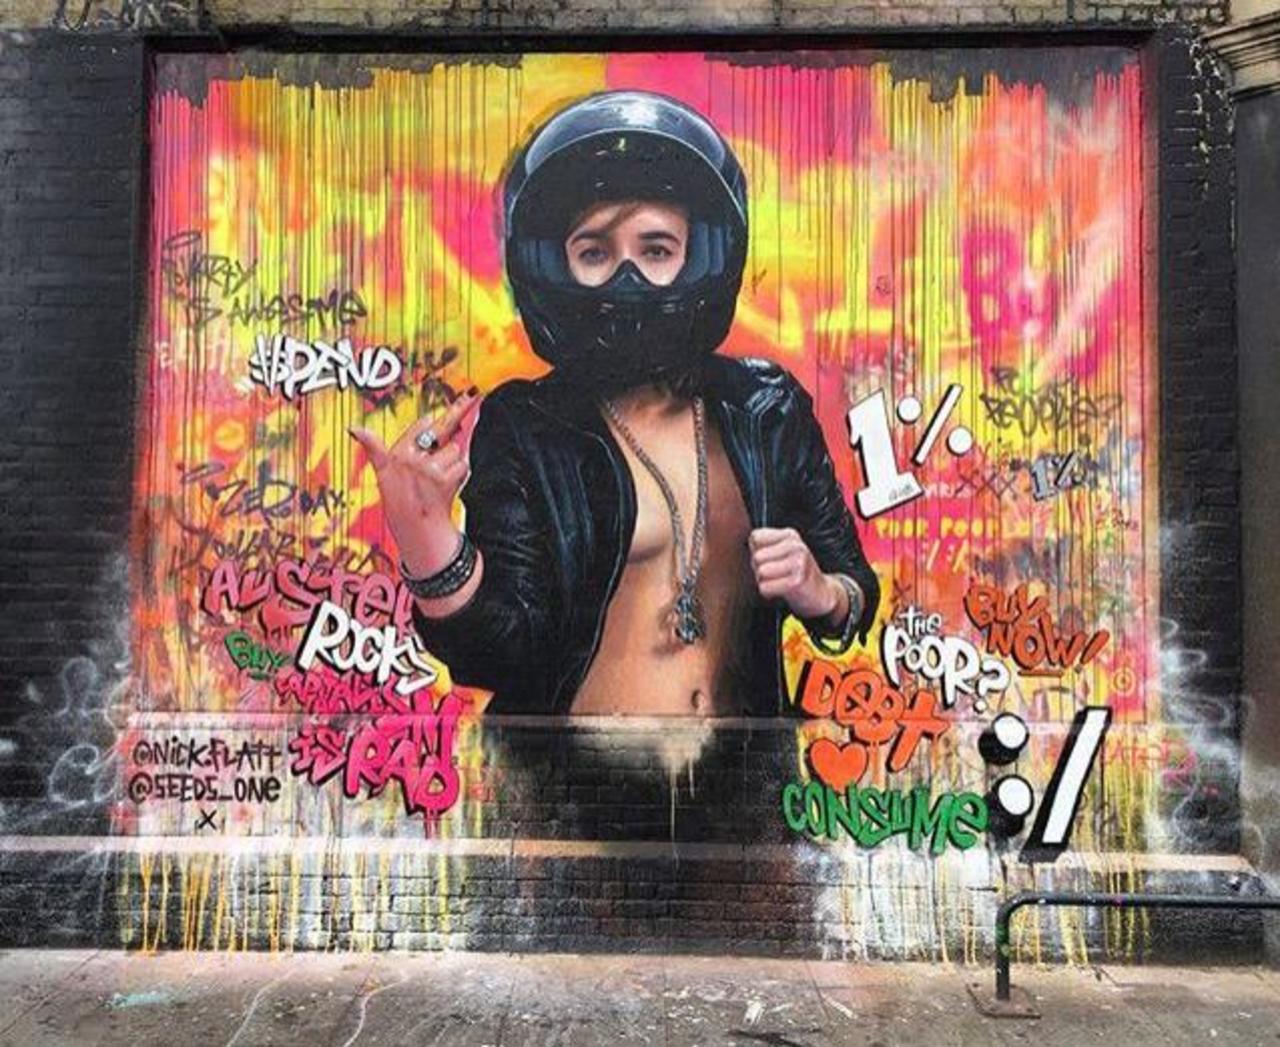 RT @GoogleStreetArt: New Street Art collab by Nick Flatt &  Seeds One in London 

#art #graffiti #mural #streetart http://t.co/7oEycZ5OzB